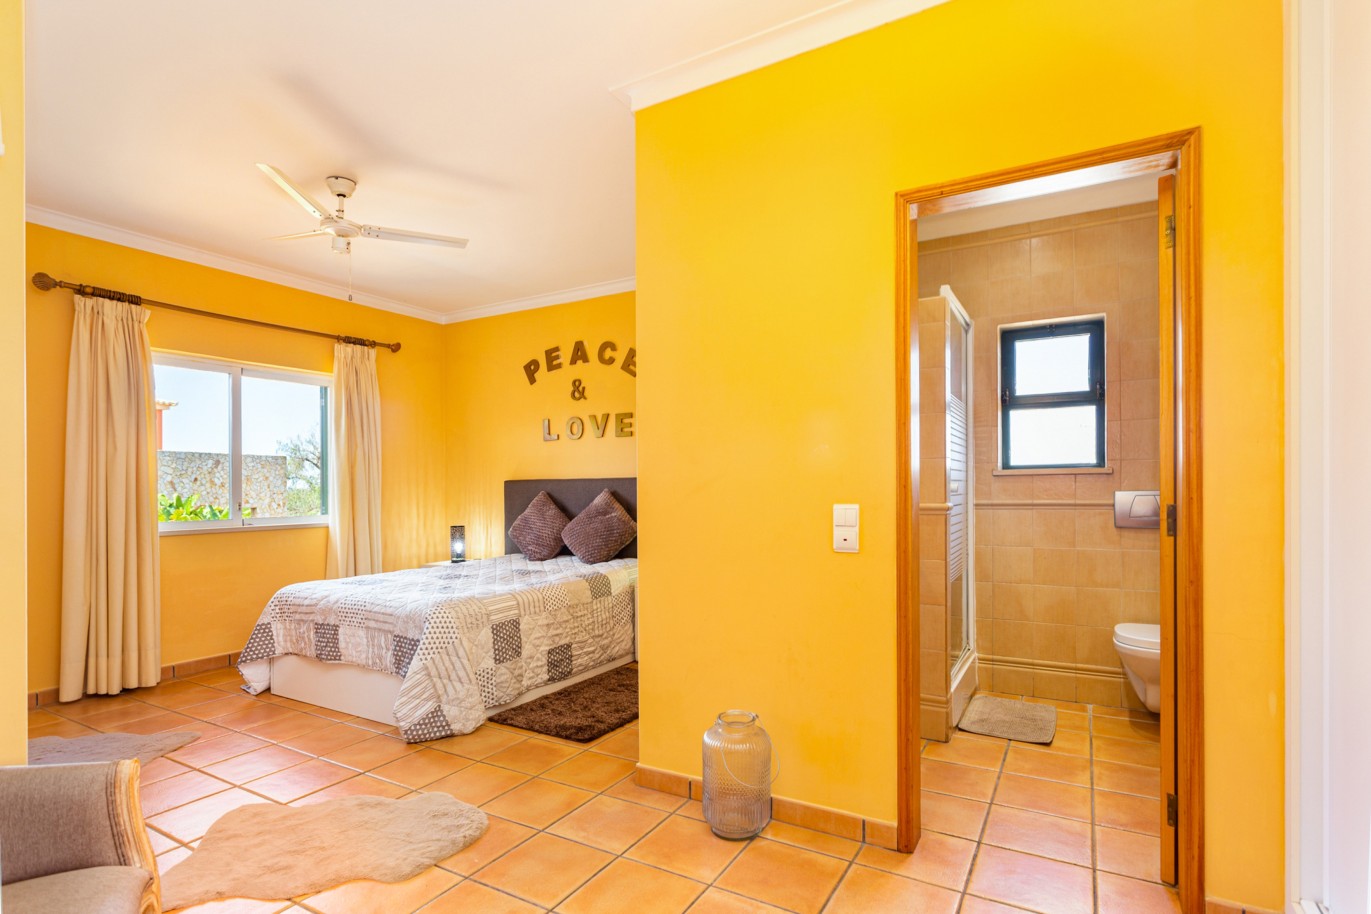 5 Bedroom Villa with 2 Bedroom Annex, for sale, in Alvor, Algarve_220964